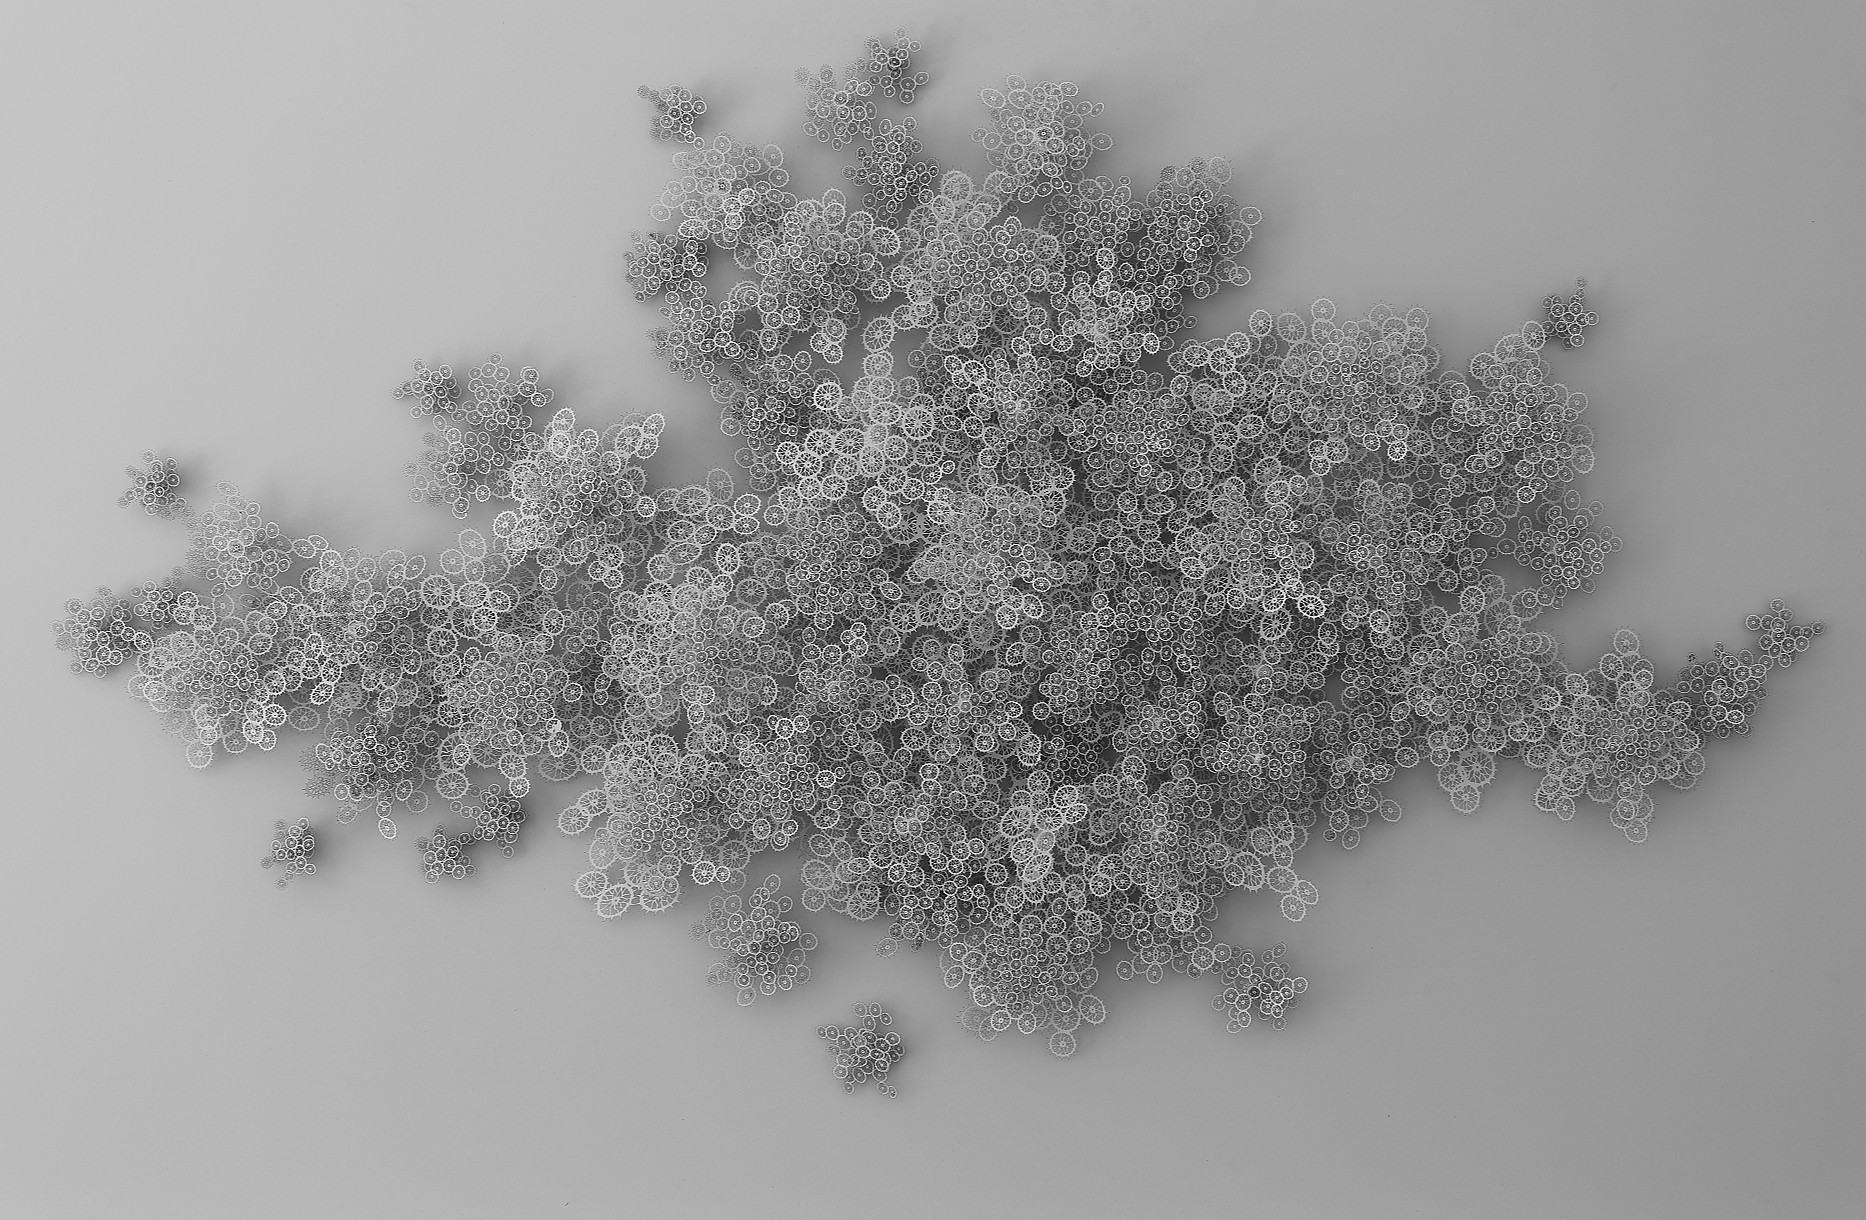 Rogan Brown – Paper Sculptures cell cloud